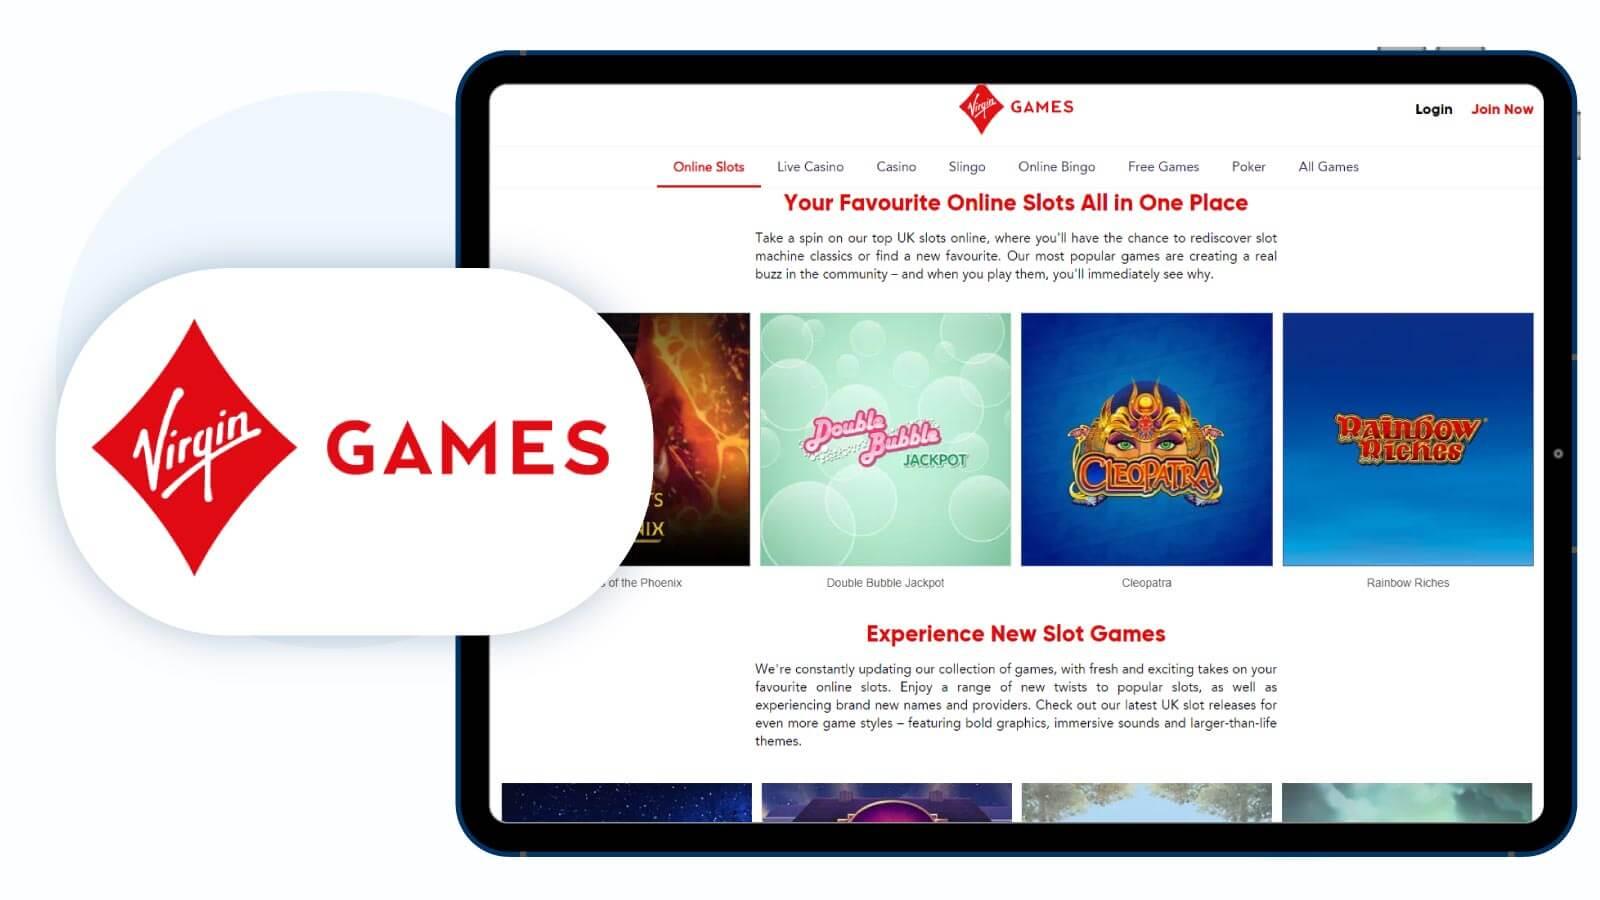 Virgin Games casino slot games slection